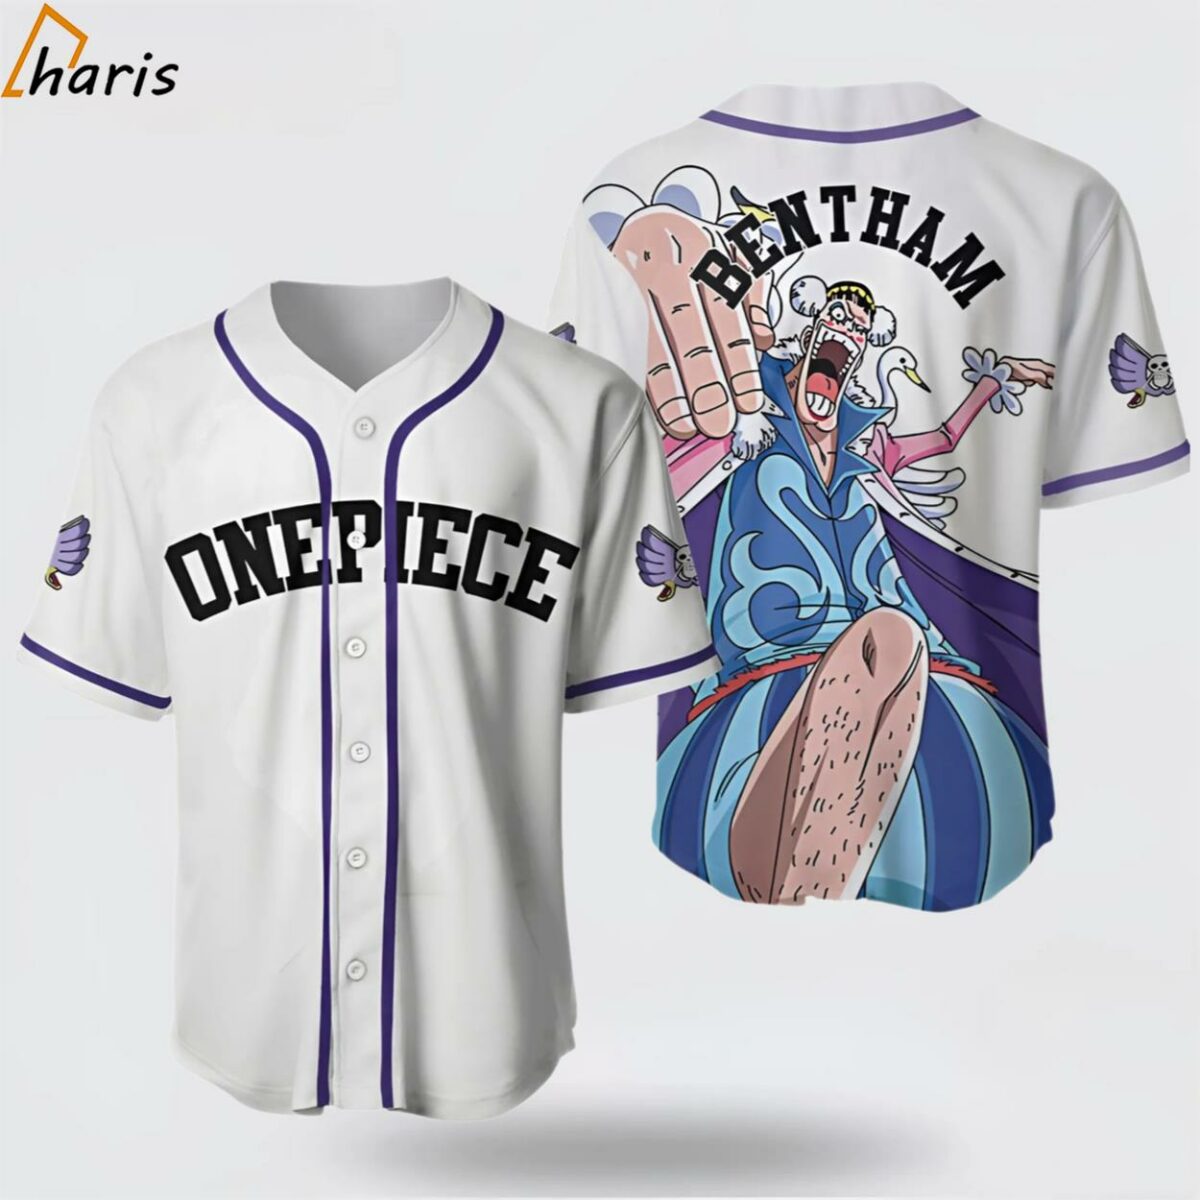 Bentham One Piece Custom Anime Baseball Jersey 1 jersey